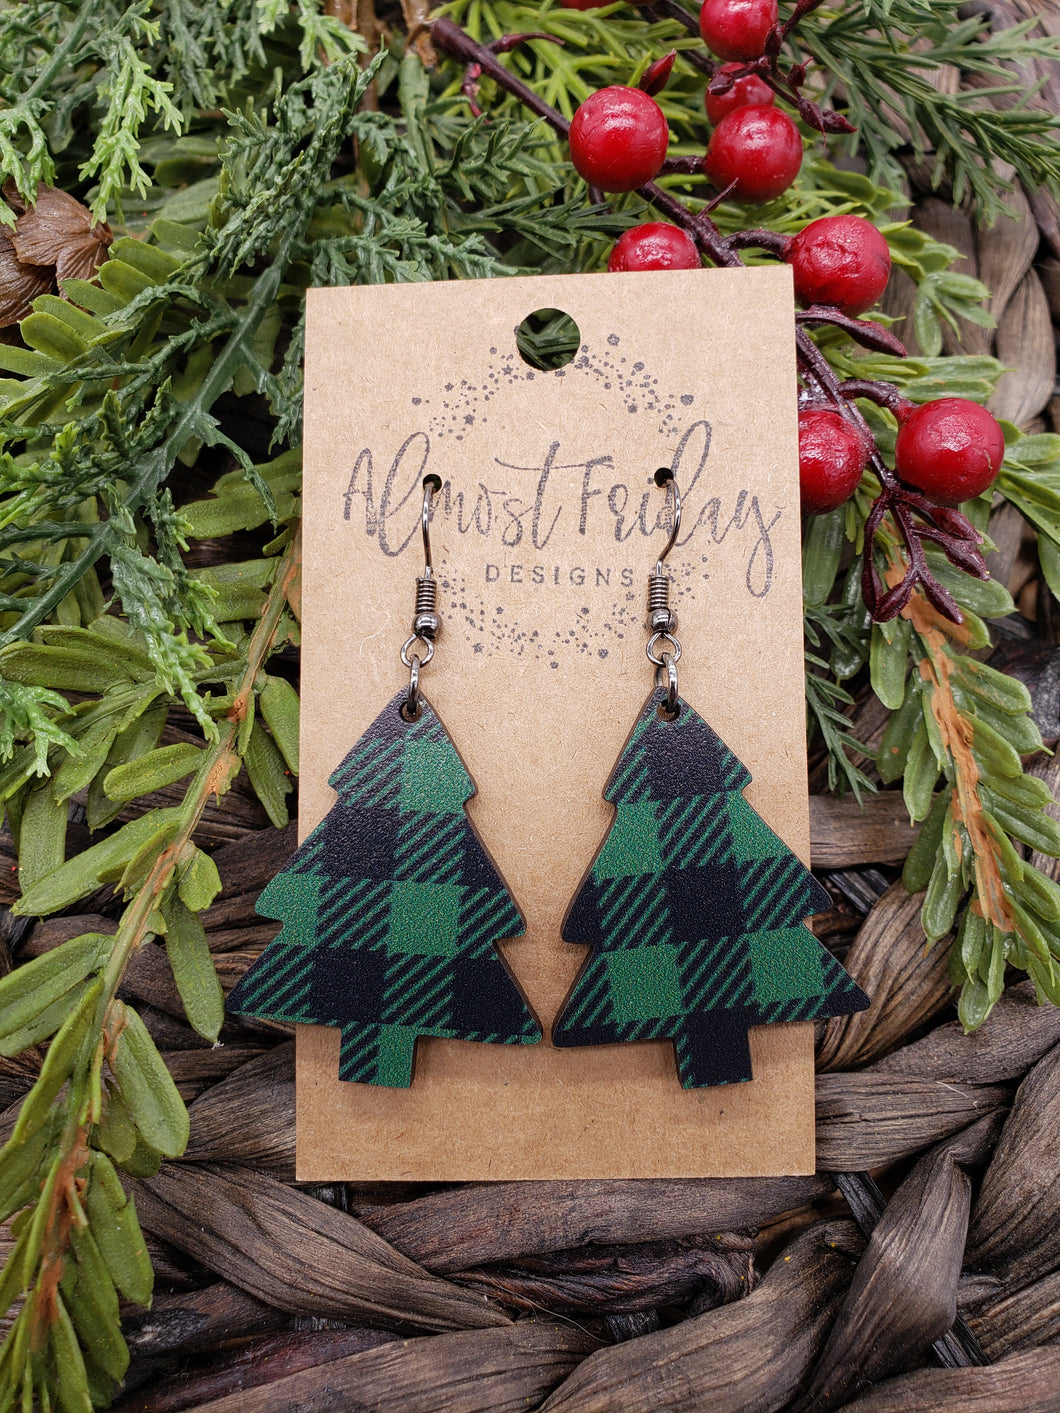 Wood Earrings - Christmas Earrings - Christmas Tree - Winter - Cut Out Earrings - Green and Black - Buffalo Check - Statement Earrings